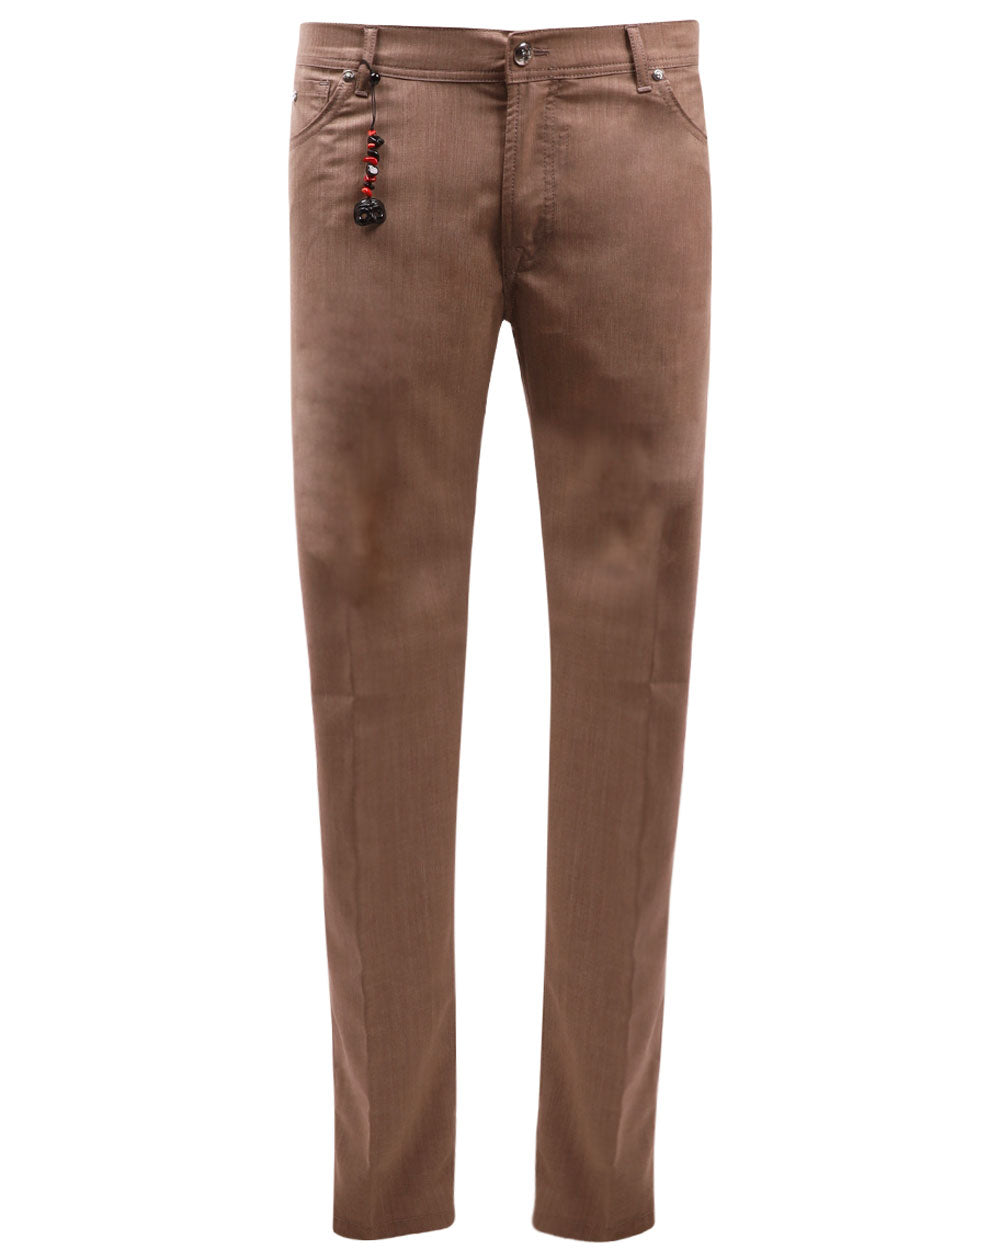 5 Pocket Stretch Pants in Light Brown